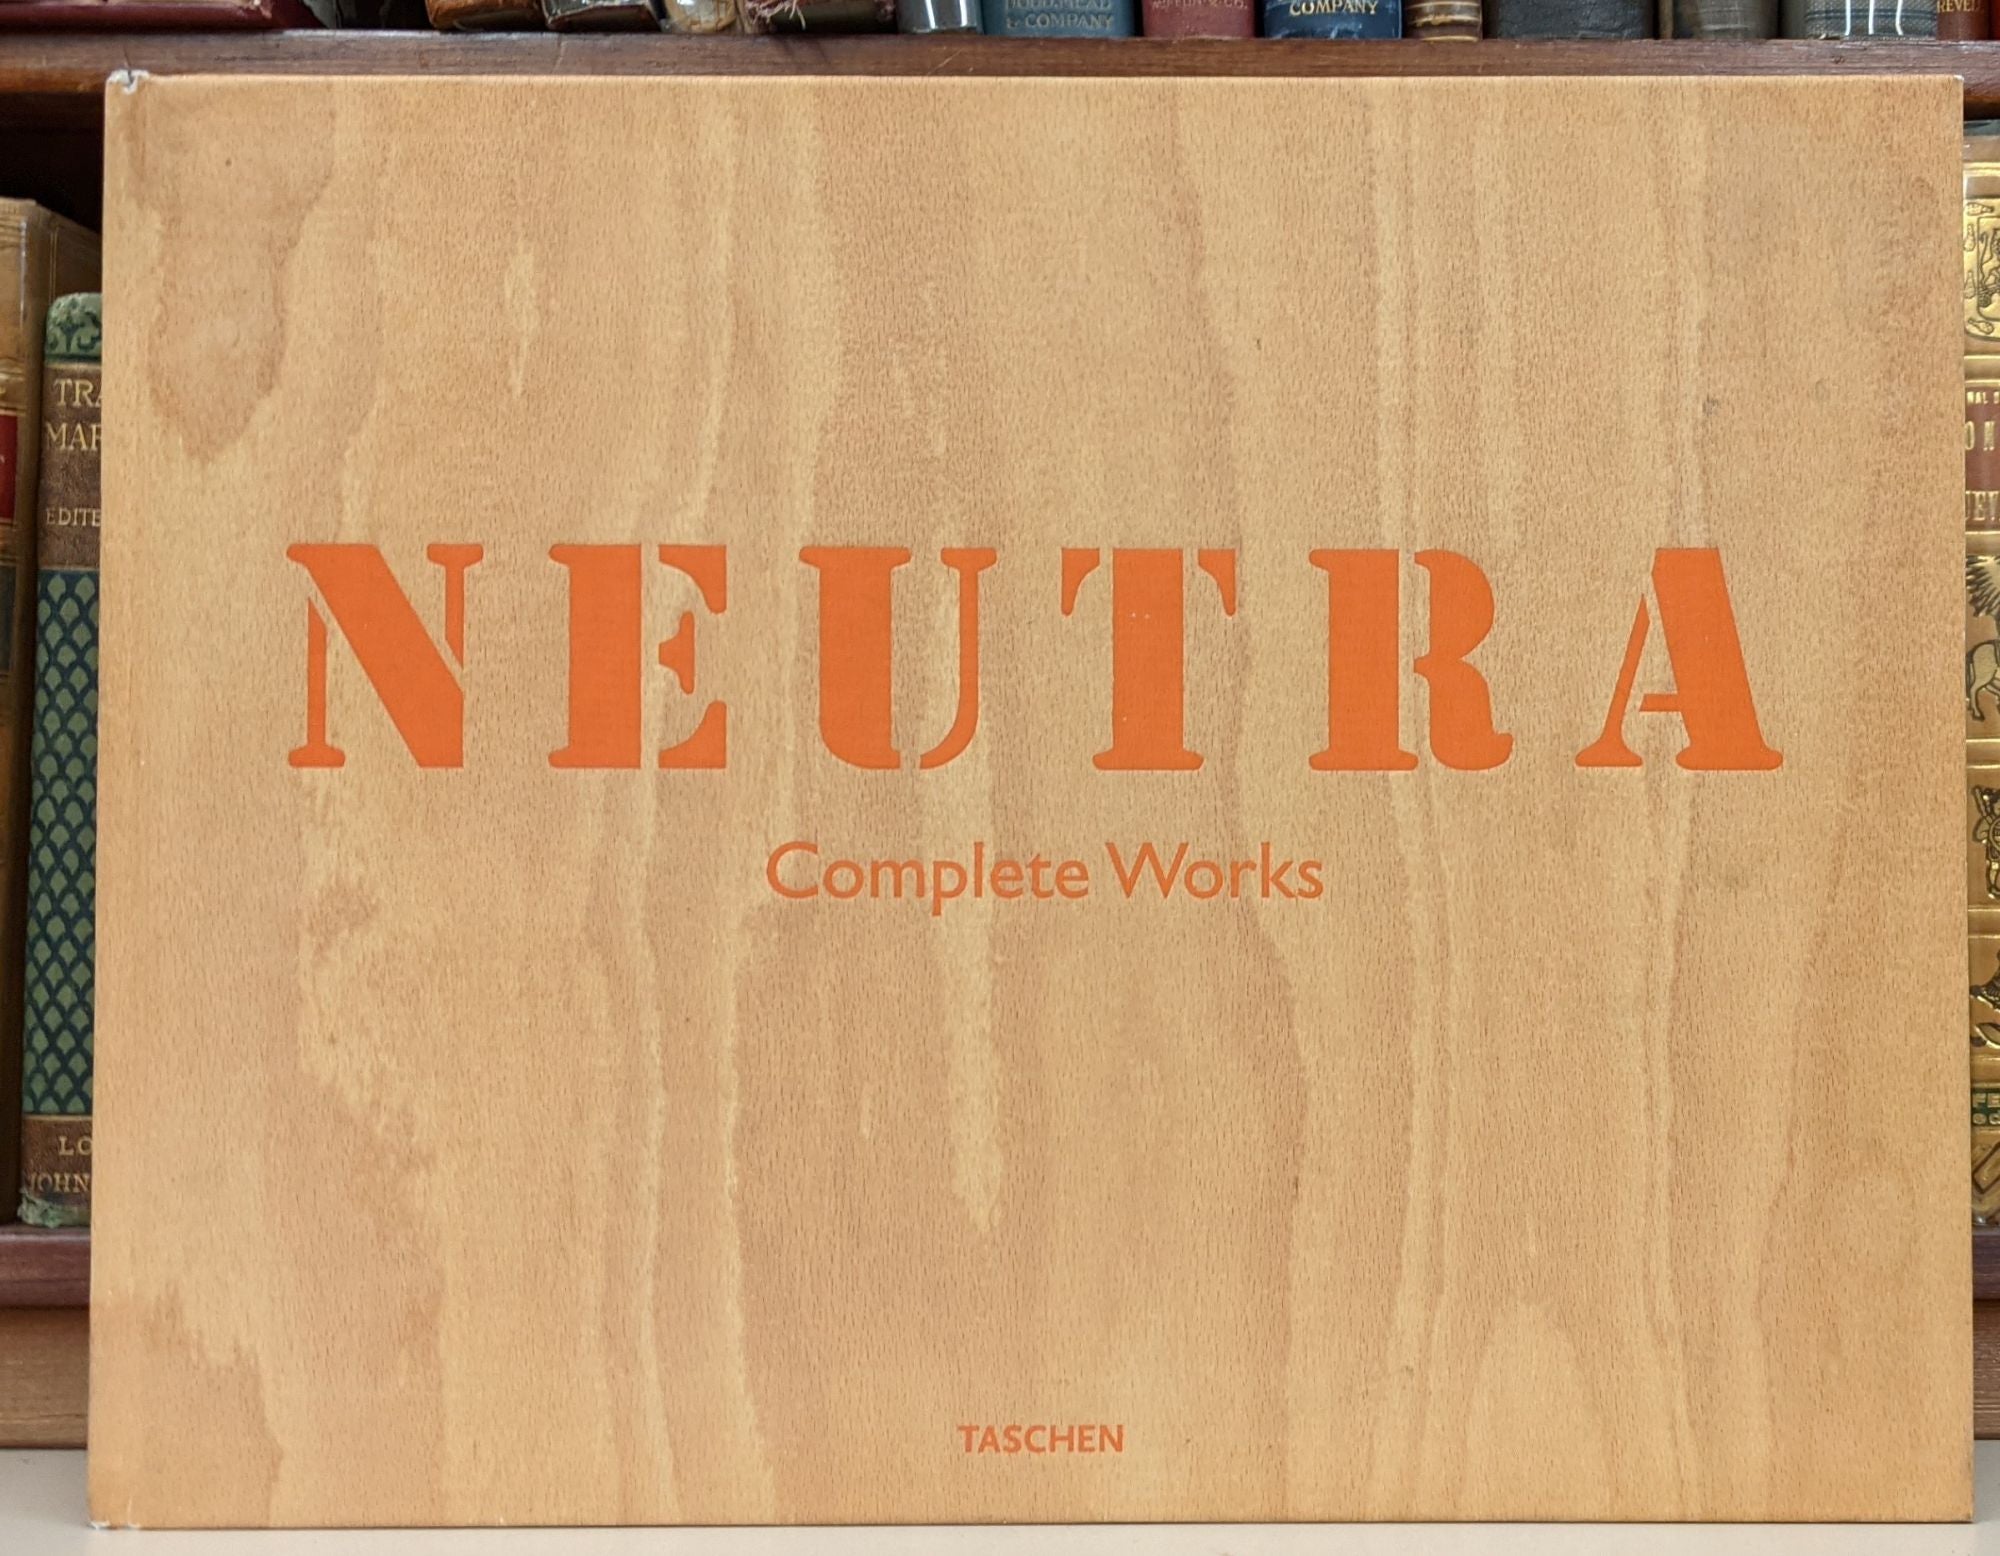 Richard Neutra: Complete Works by Barbara Mac Lamprecht on Moe's Books